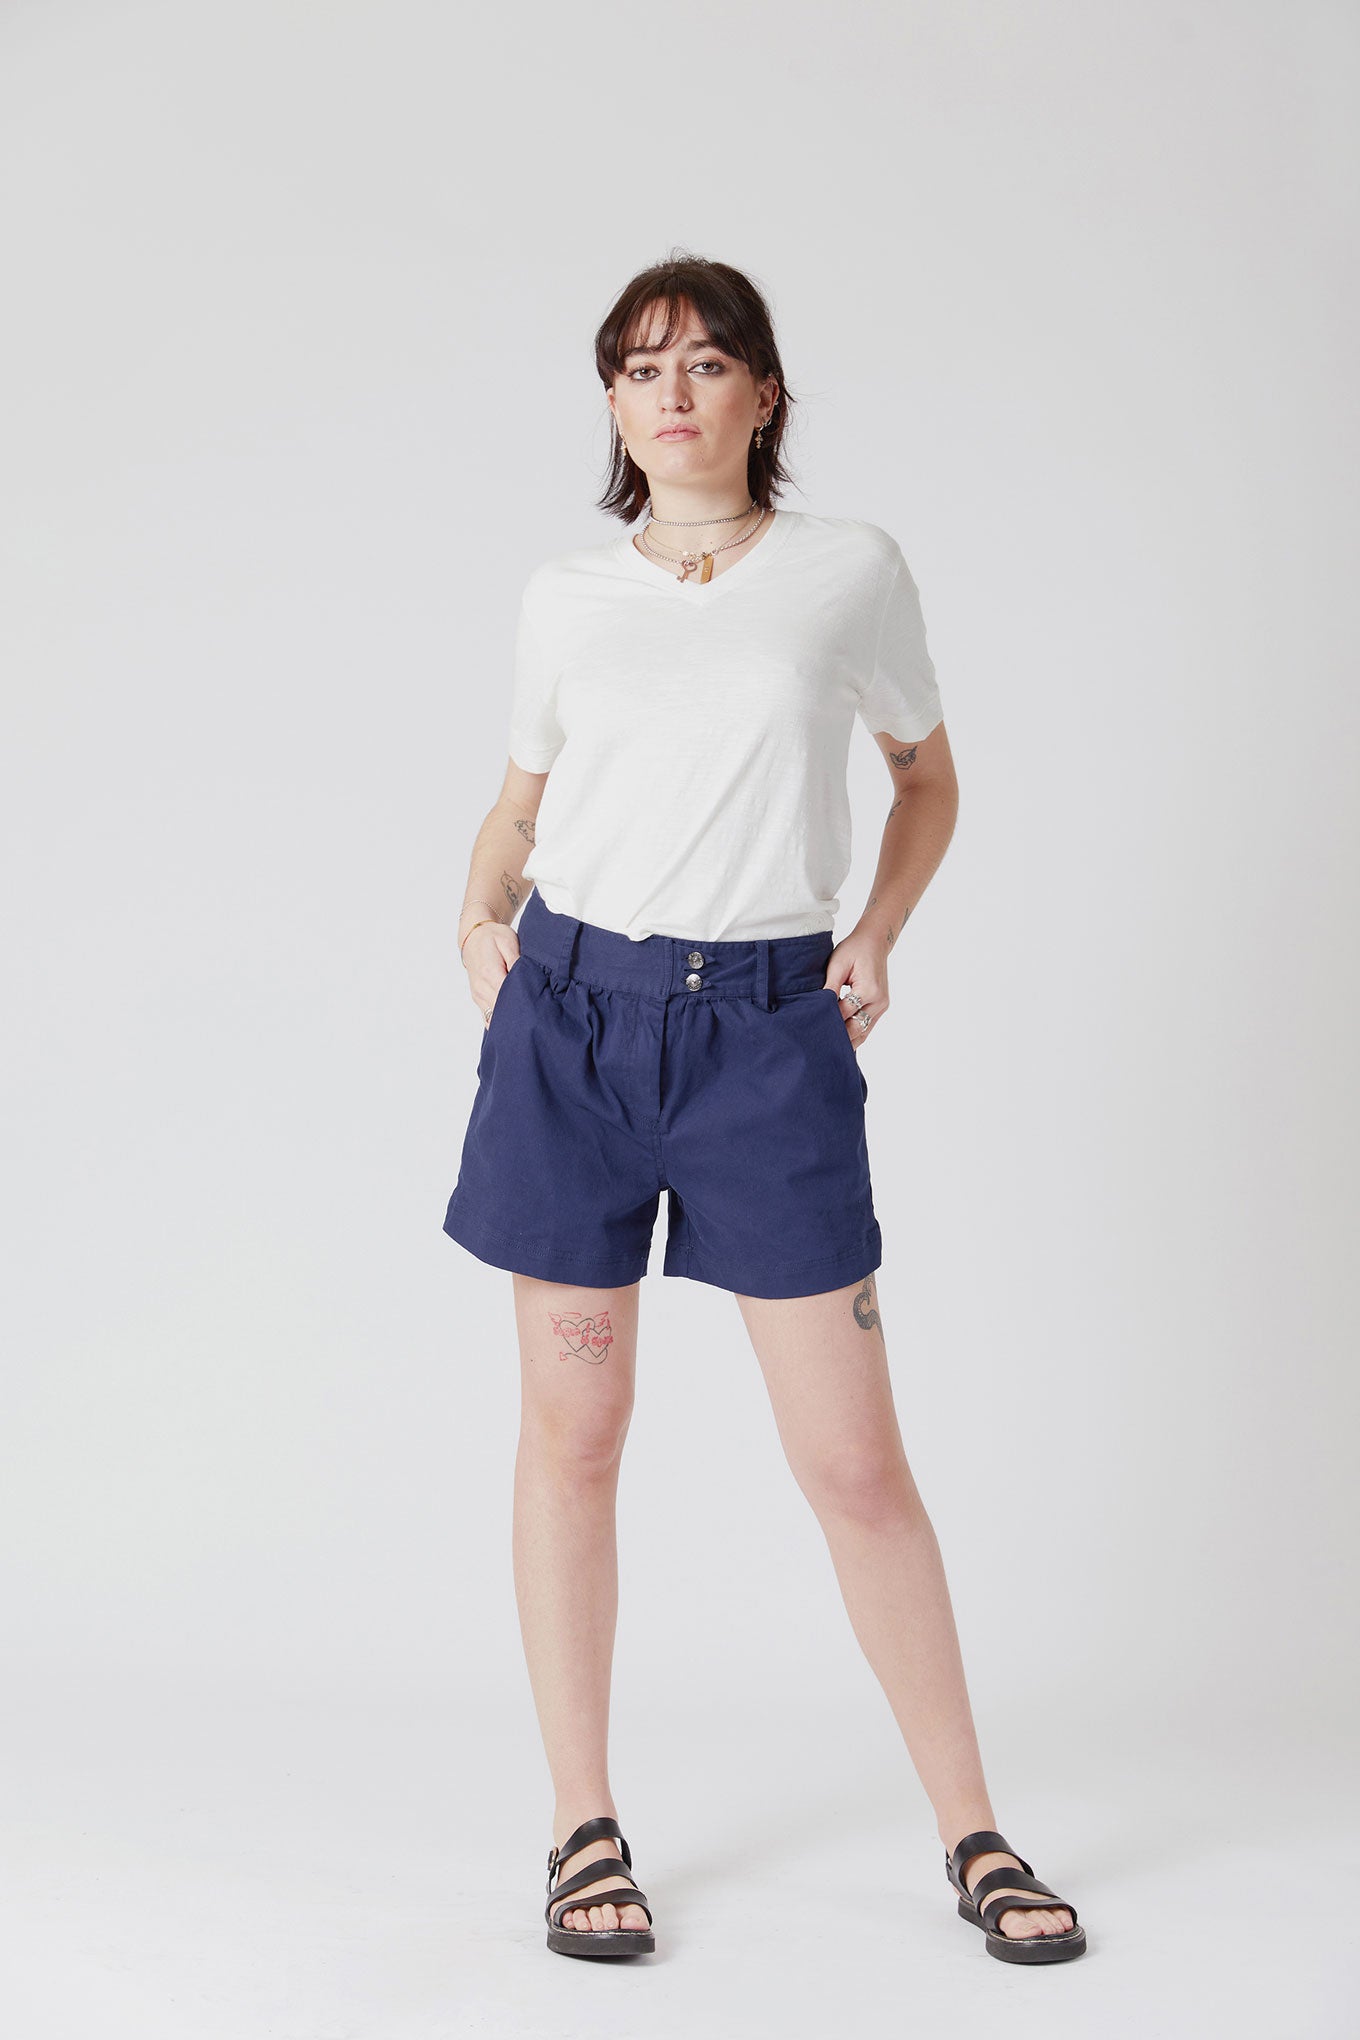 LILY Organic Cotton Shorts Navy, SIZE 3 / UK 12 / EUR 40